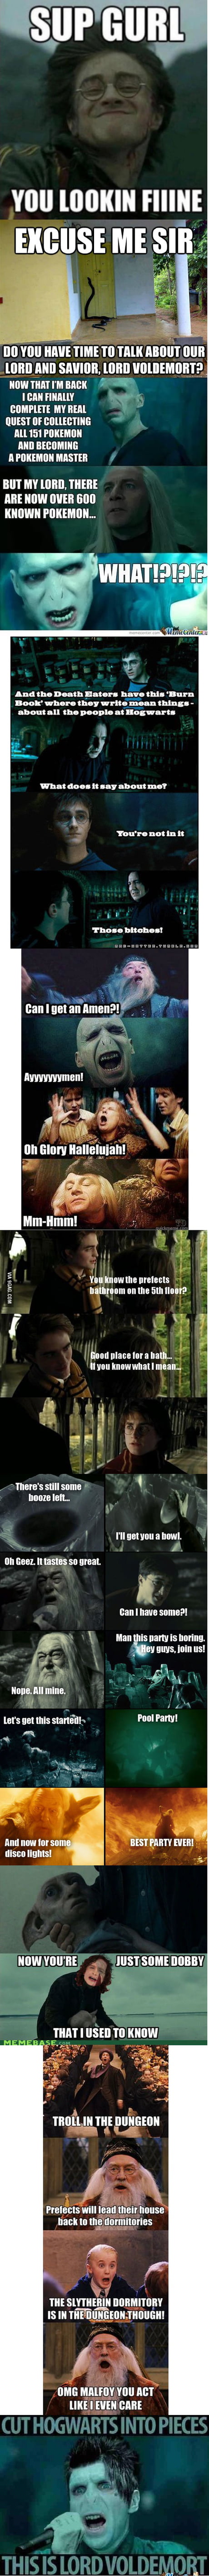 Harry Potter Memes pt1